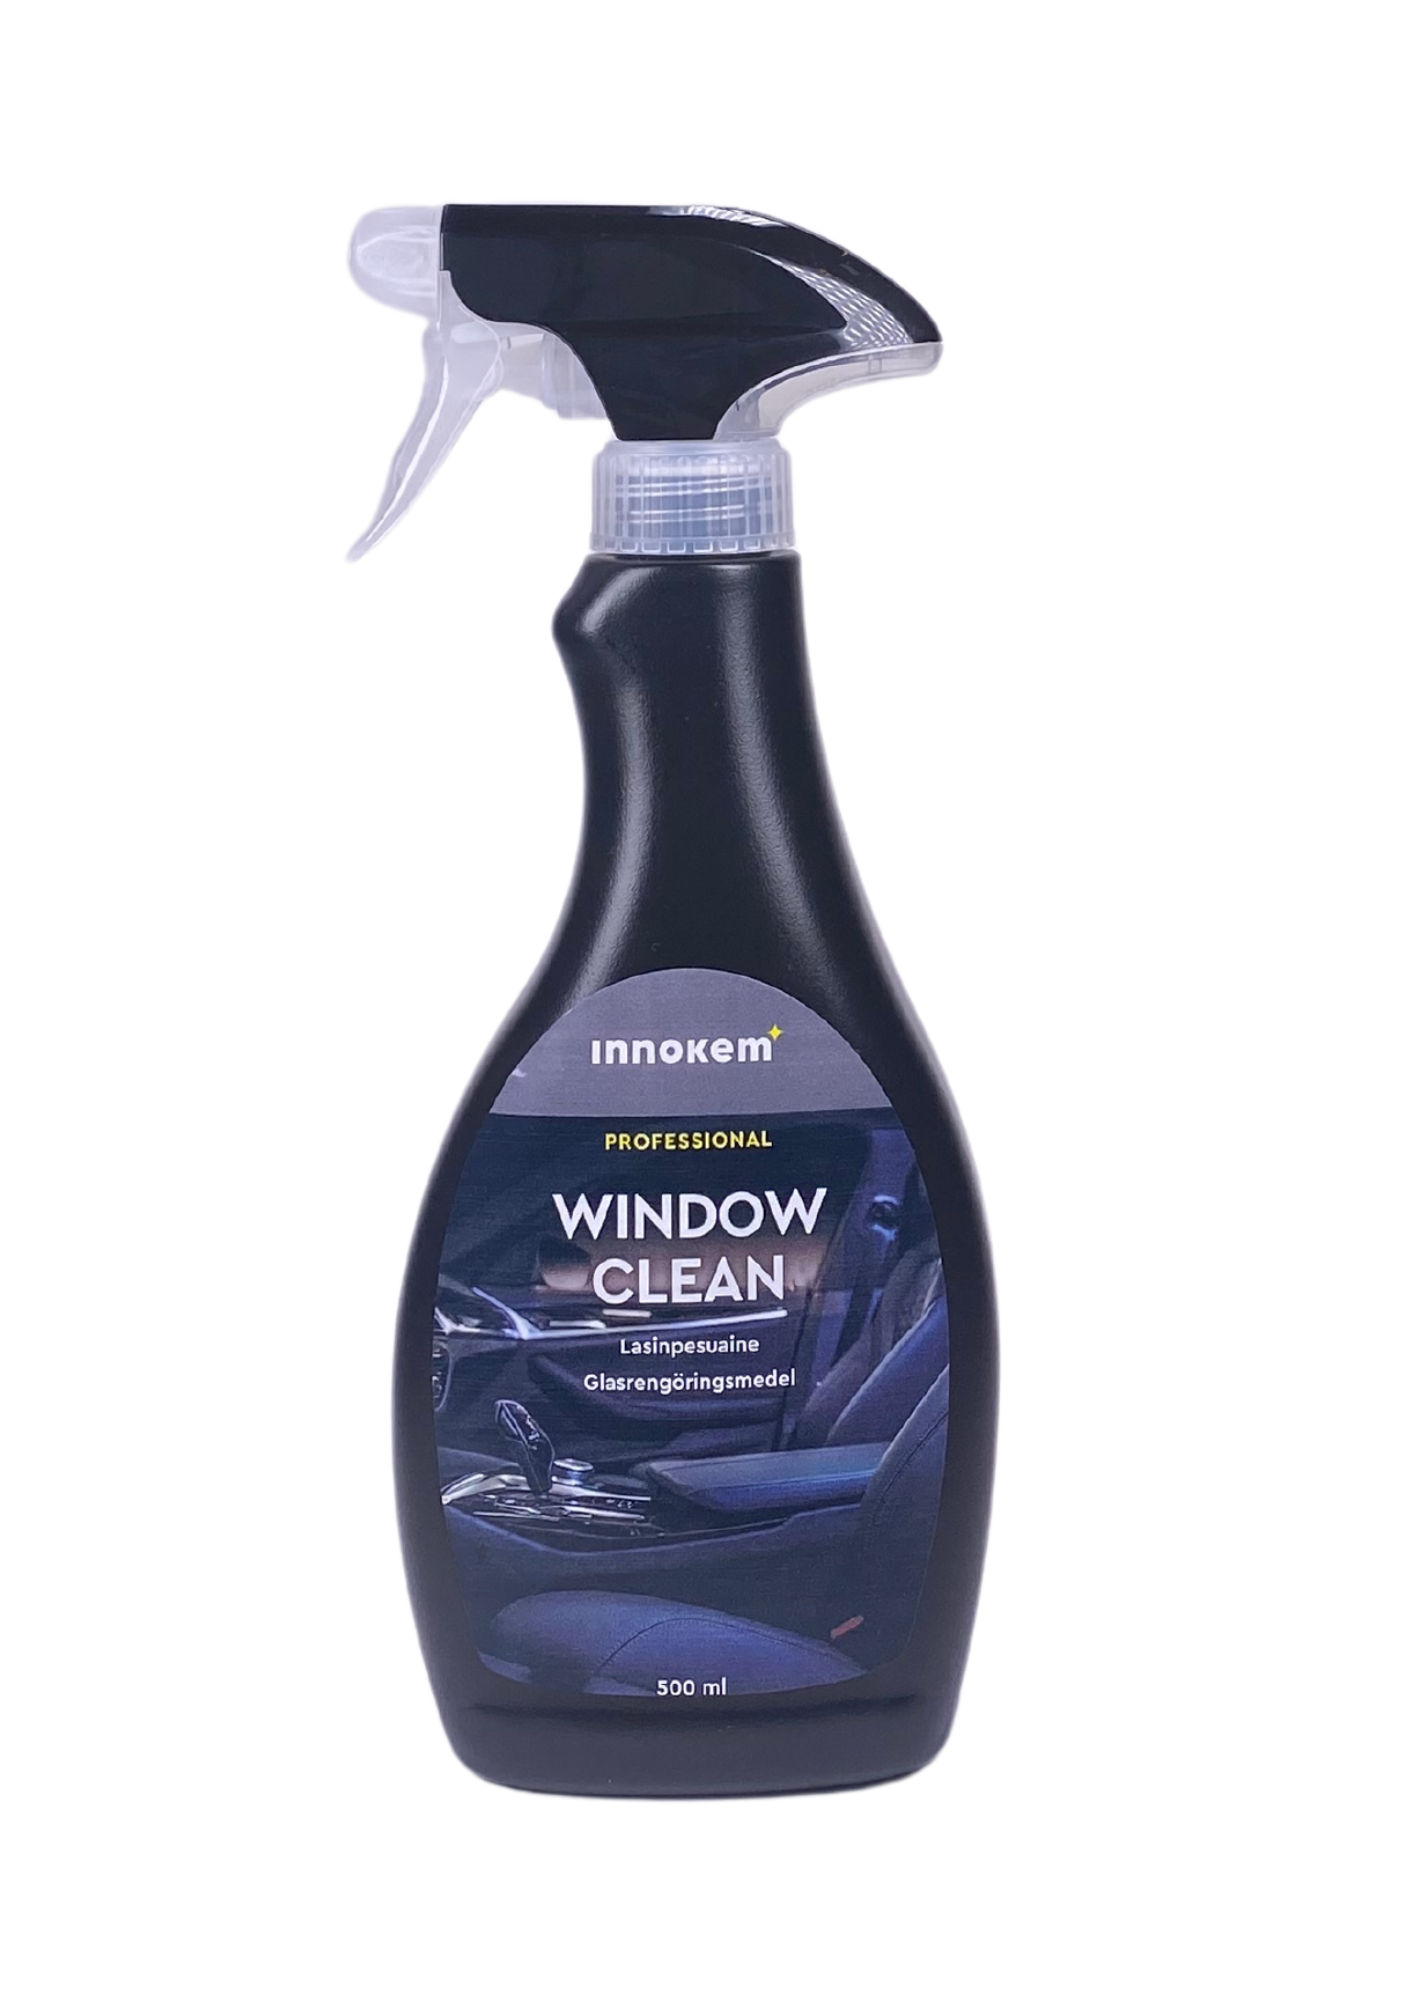 INNOKEM Window Cleaner Lasinpesuaine 500ml